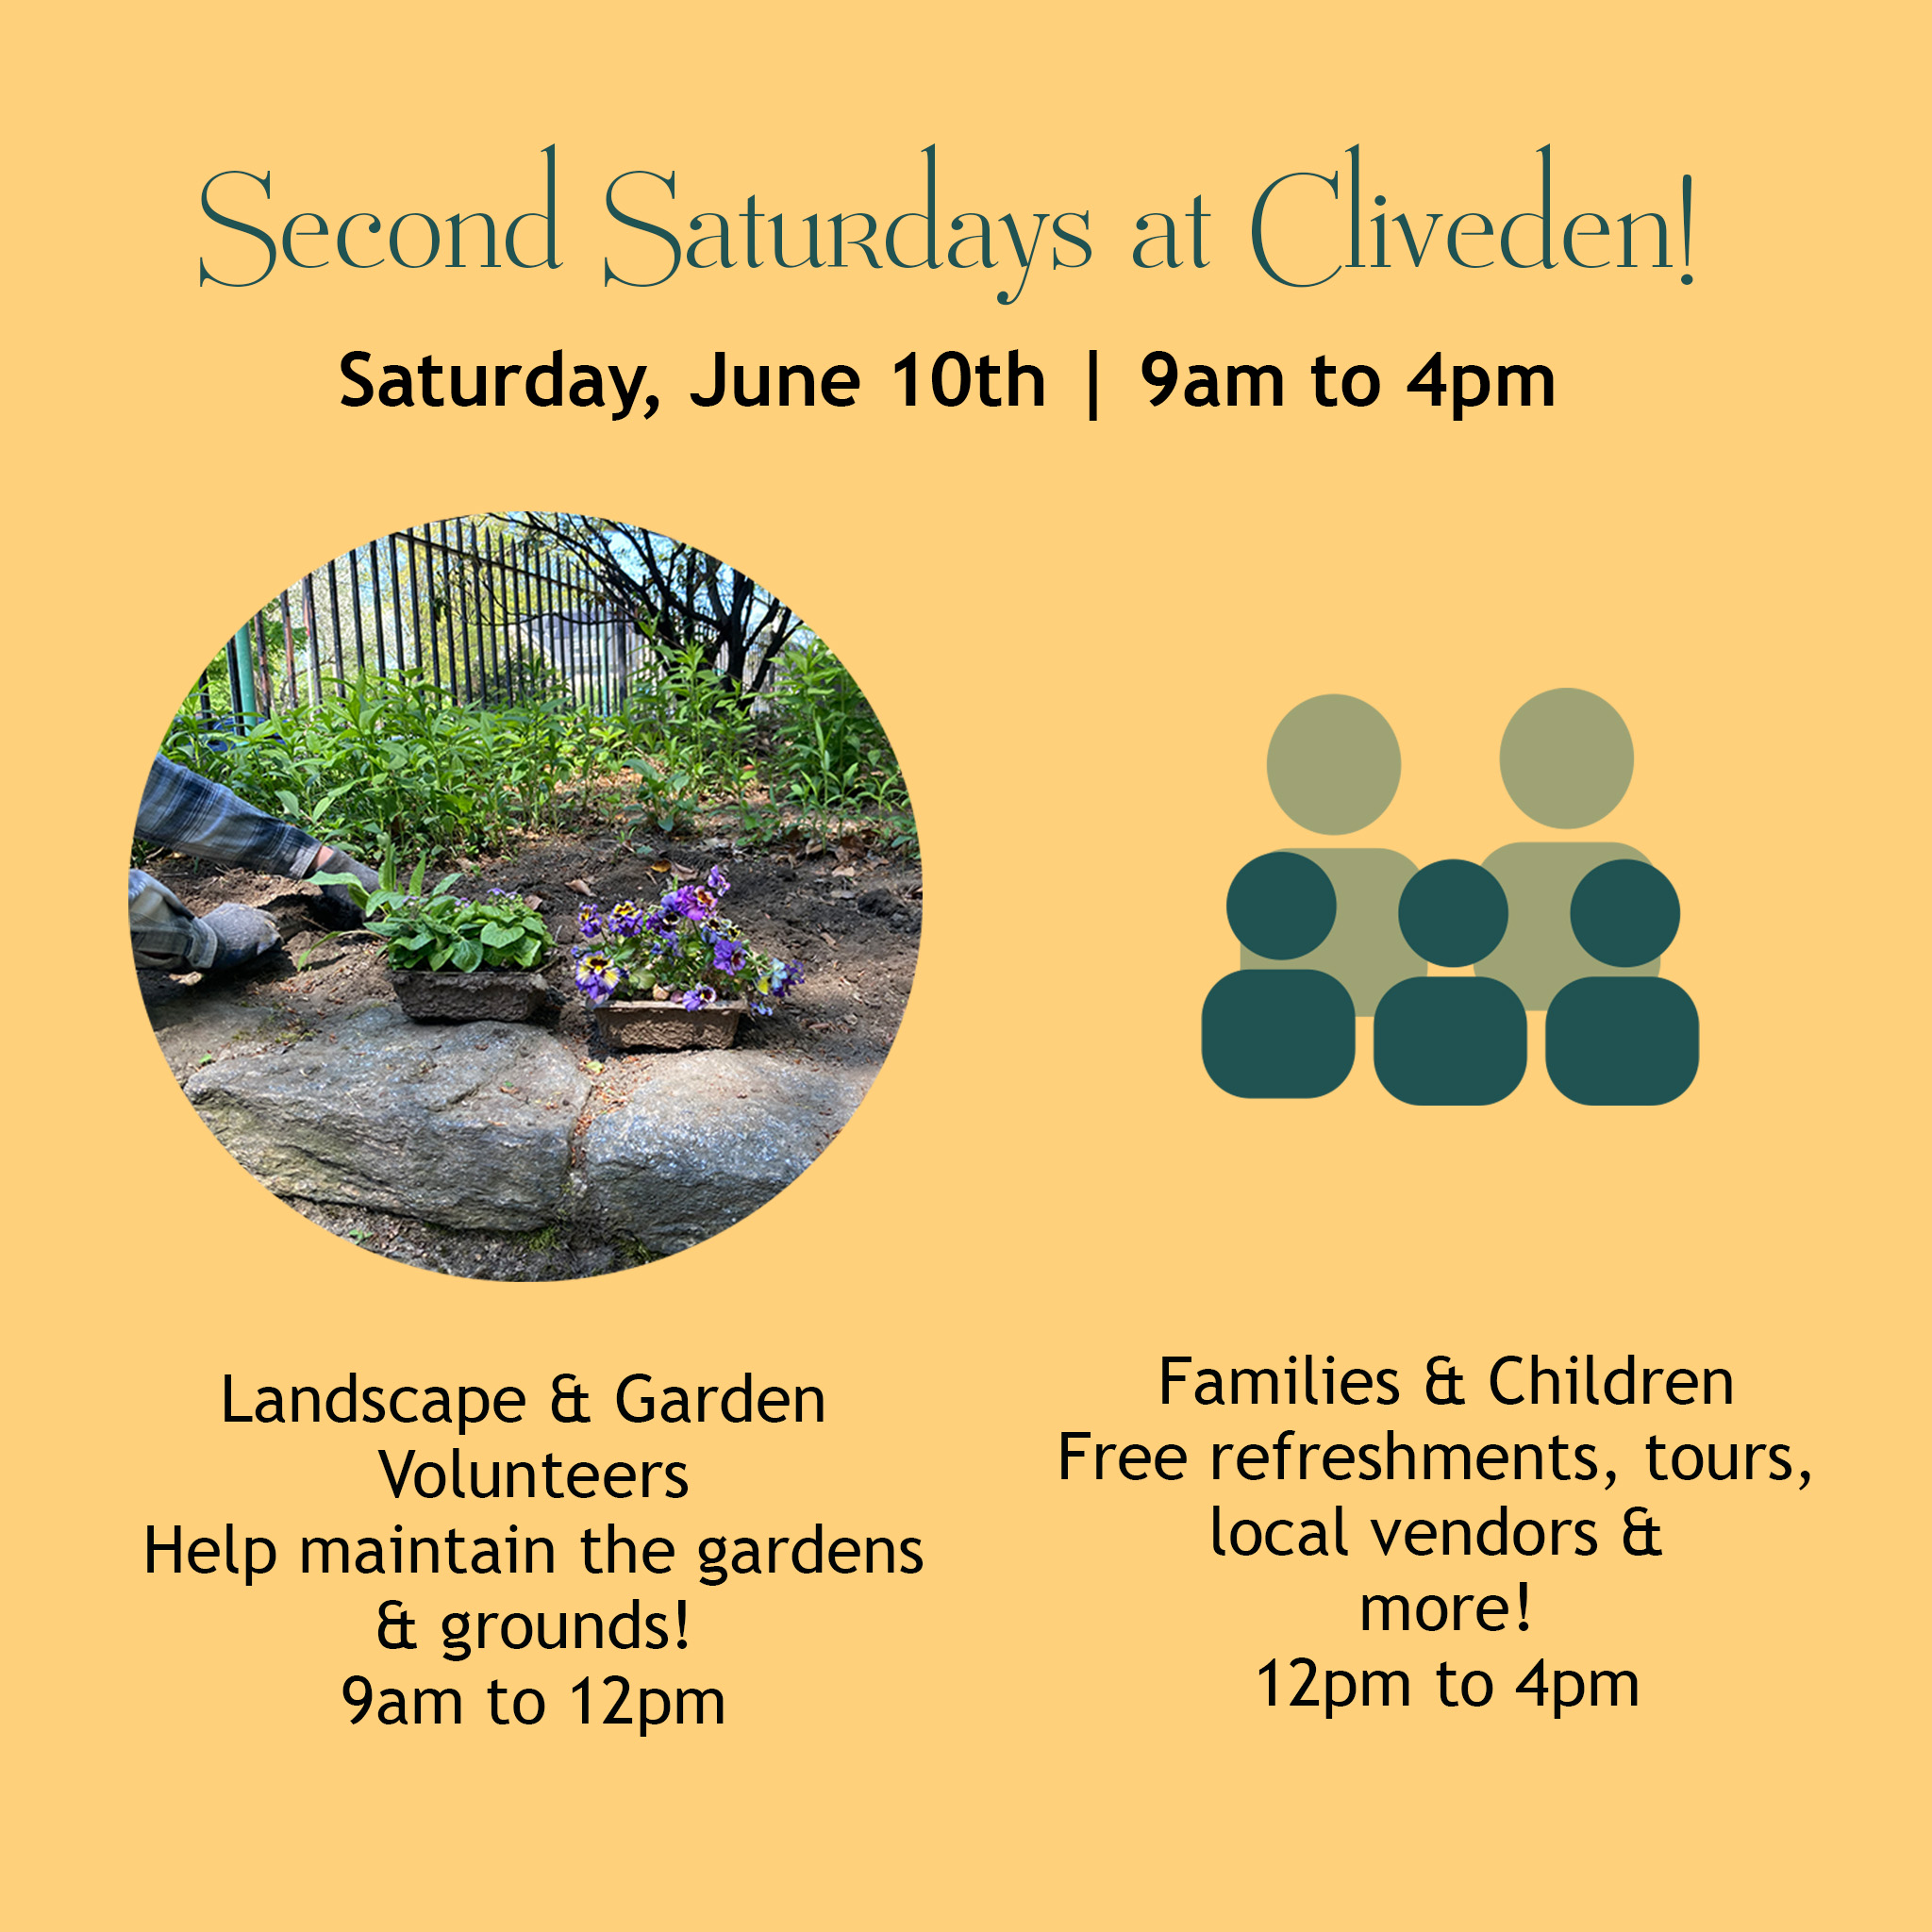 Second Saturdays: Families & Children